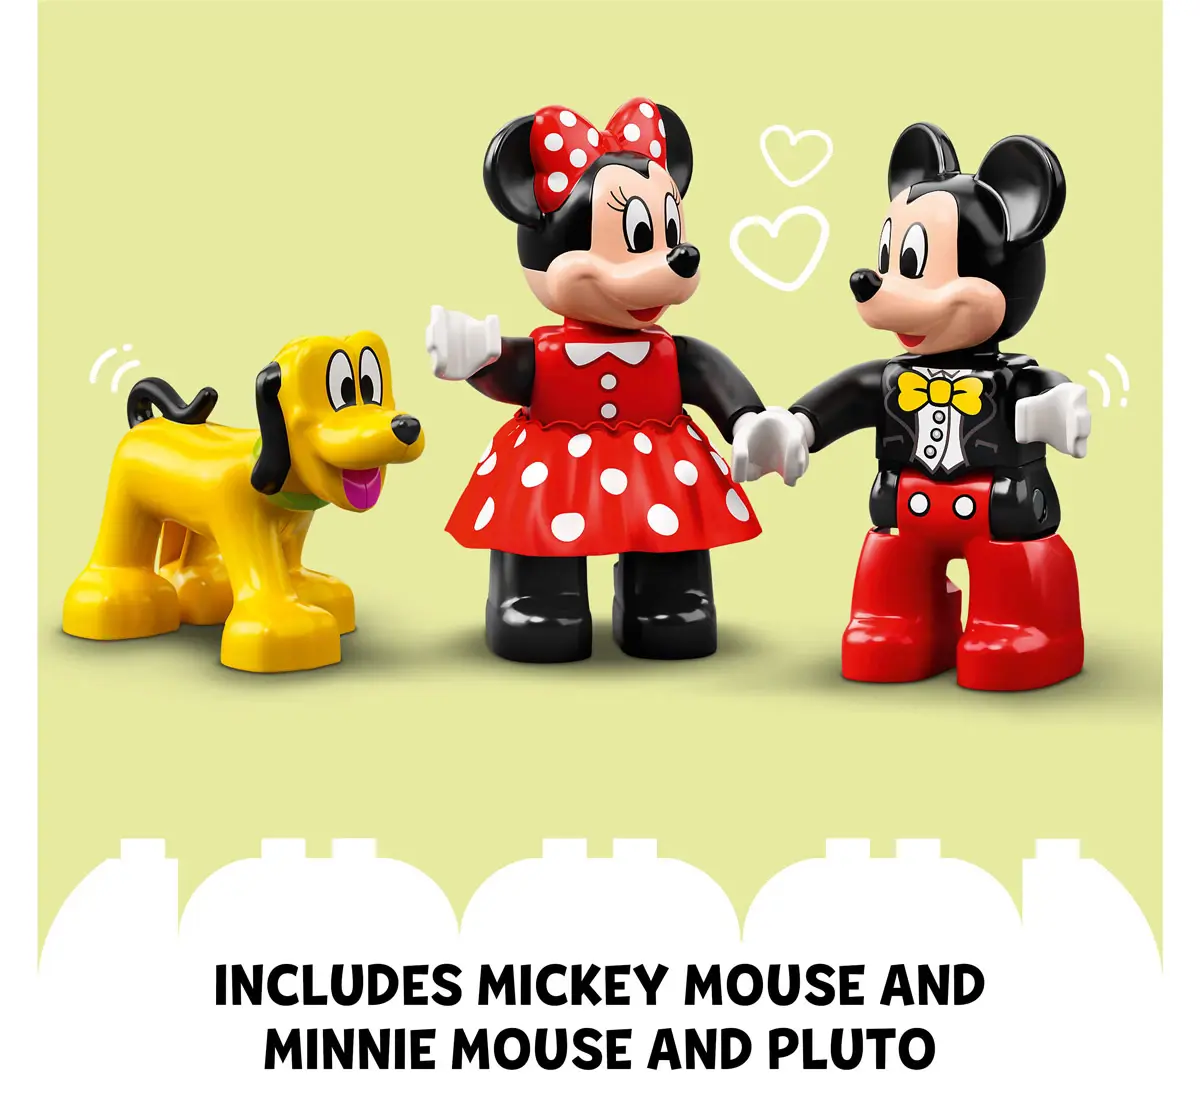 Lego Duplo Disney Mickey & Minnie Birthday Train 10941 Building Toy Multicolour For Kids Ages 2Y+ (22 Pieces)